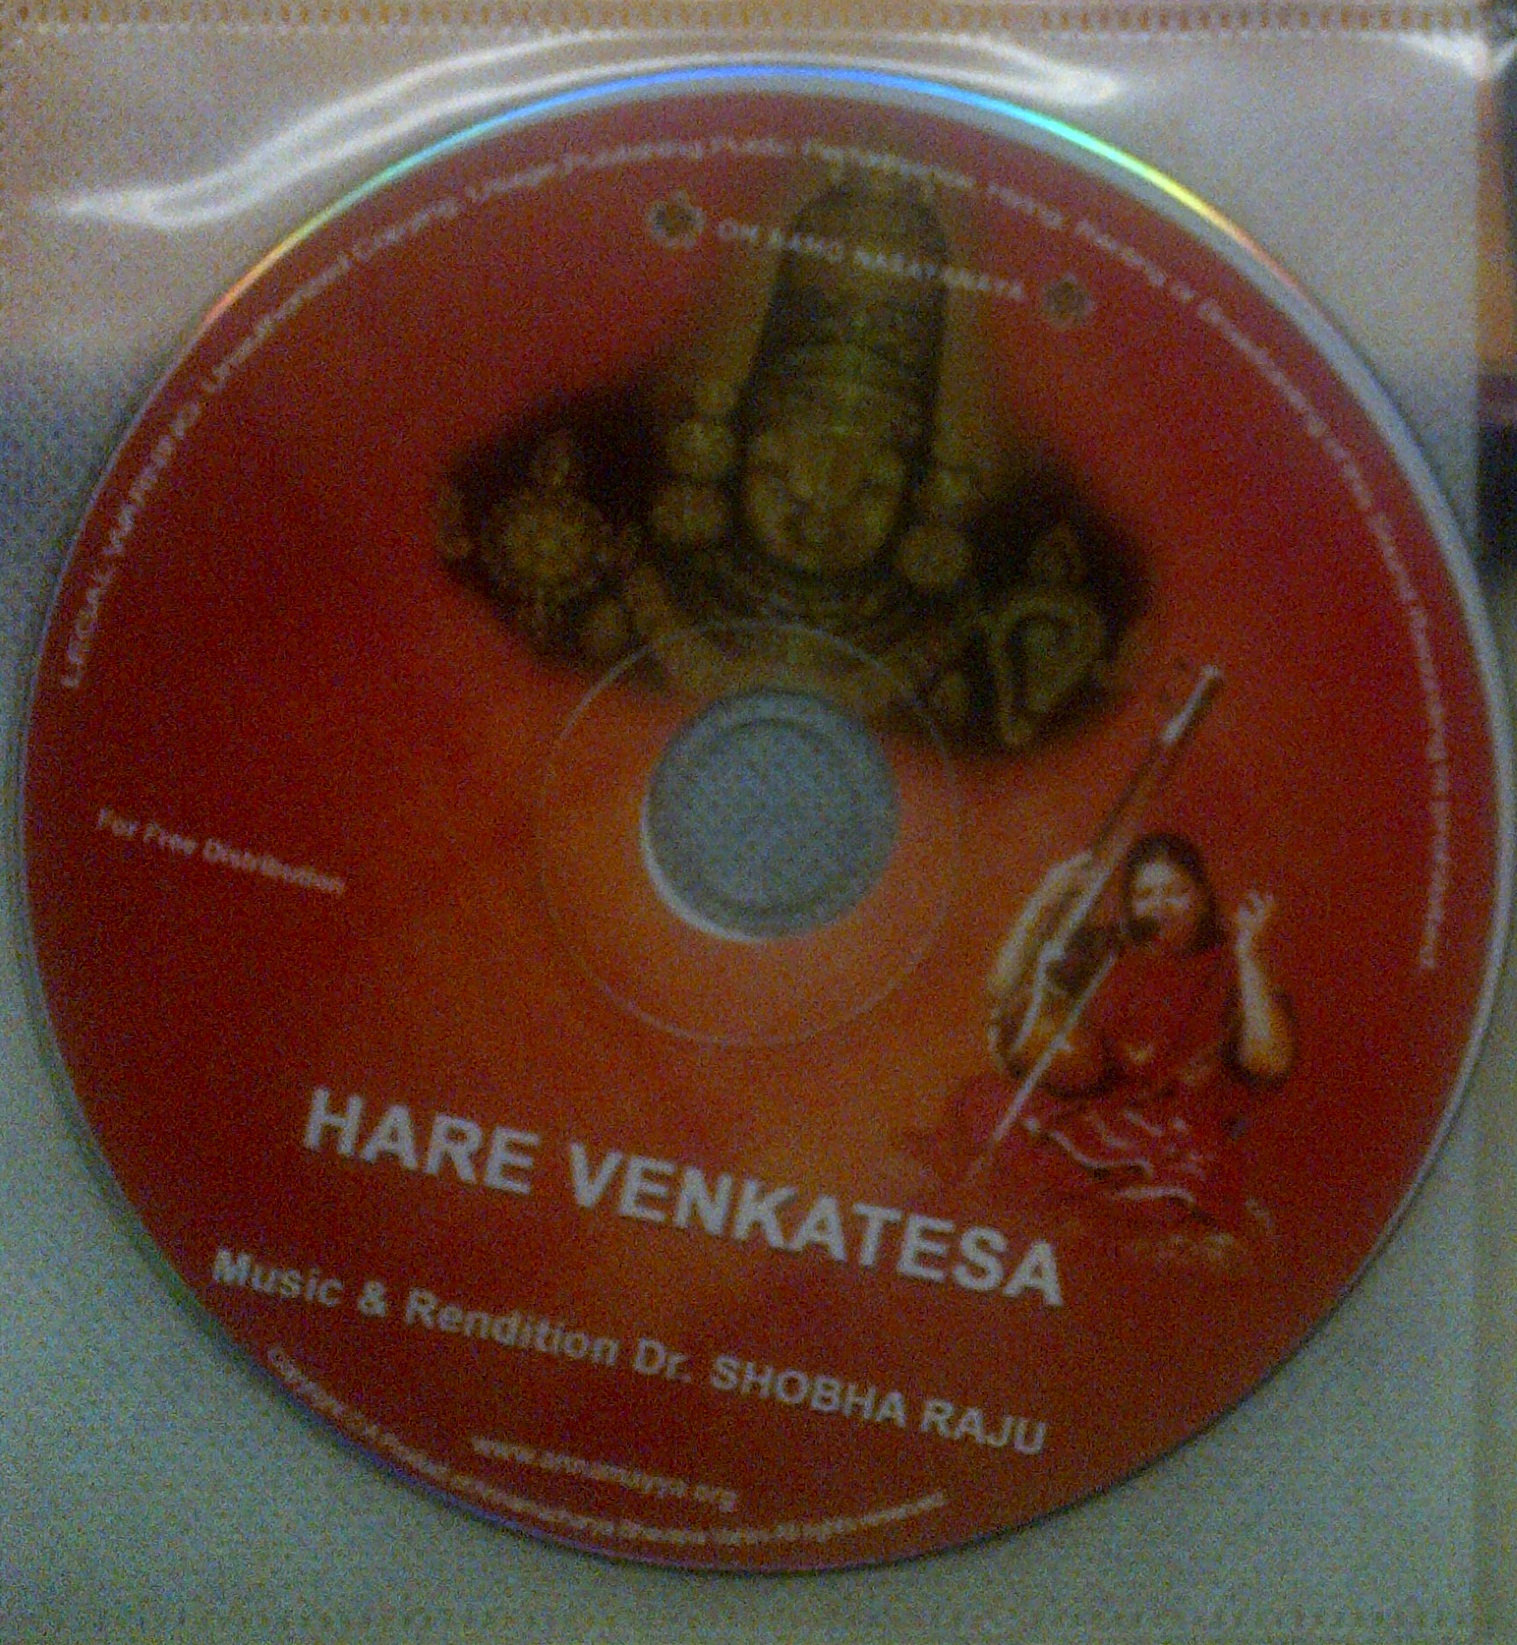 Hare Venkatesa